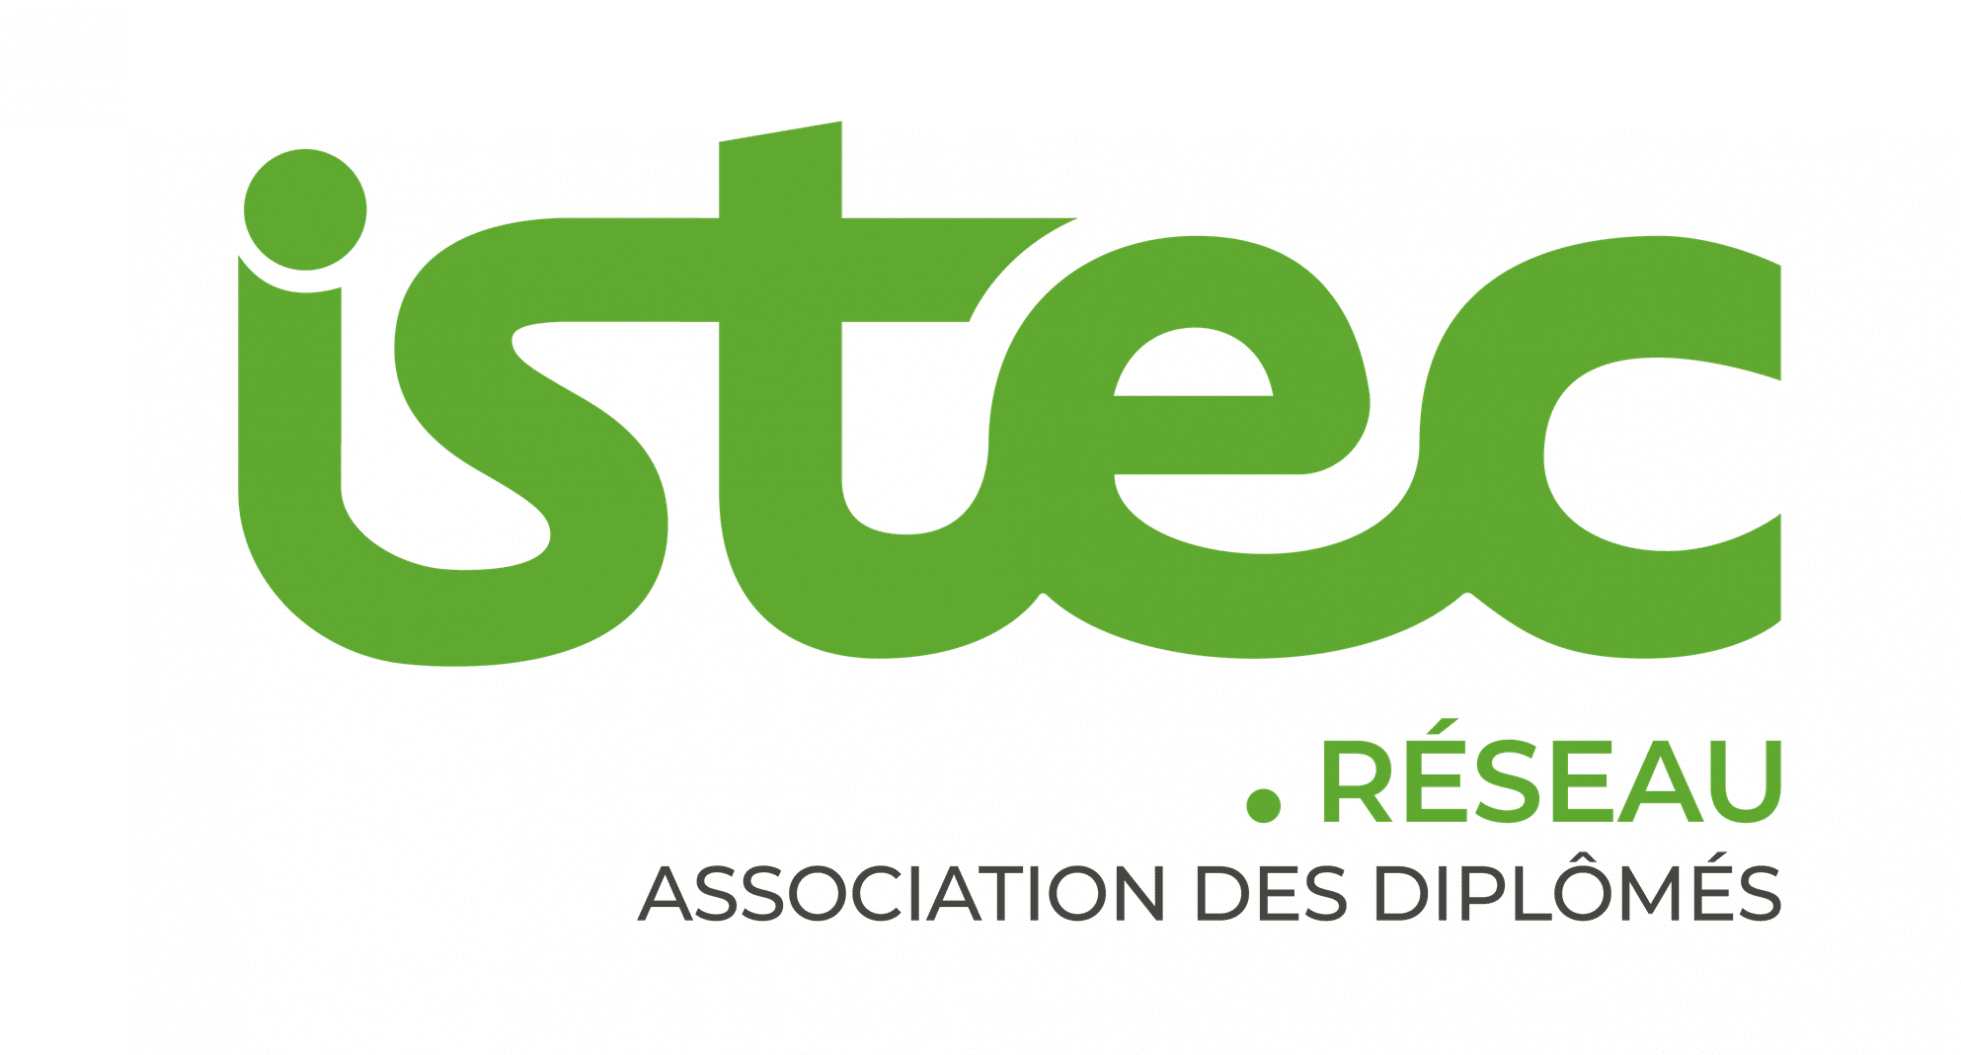 ISTEC Réseau - Association des diplômés ISTEC